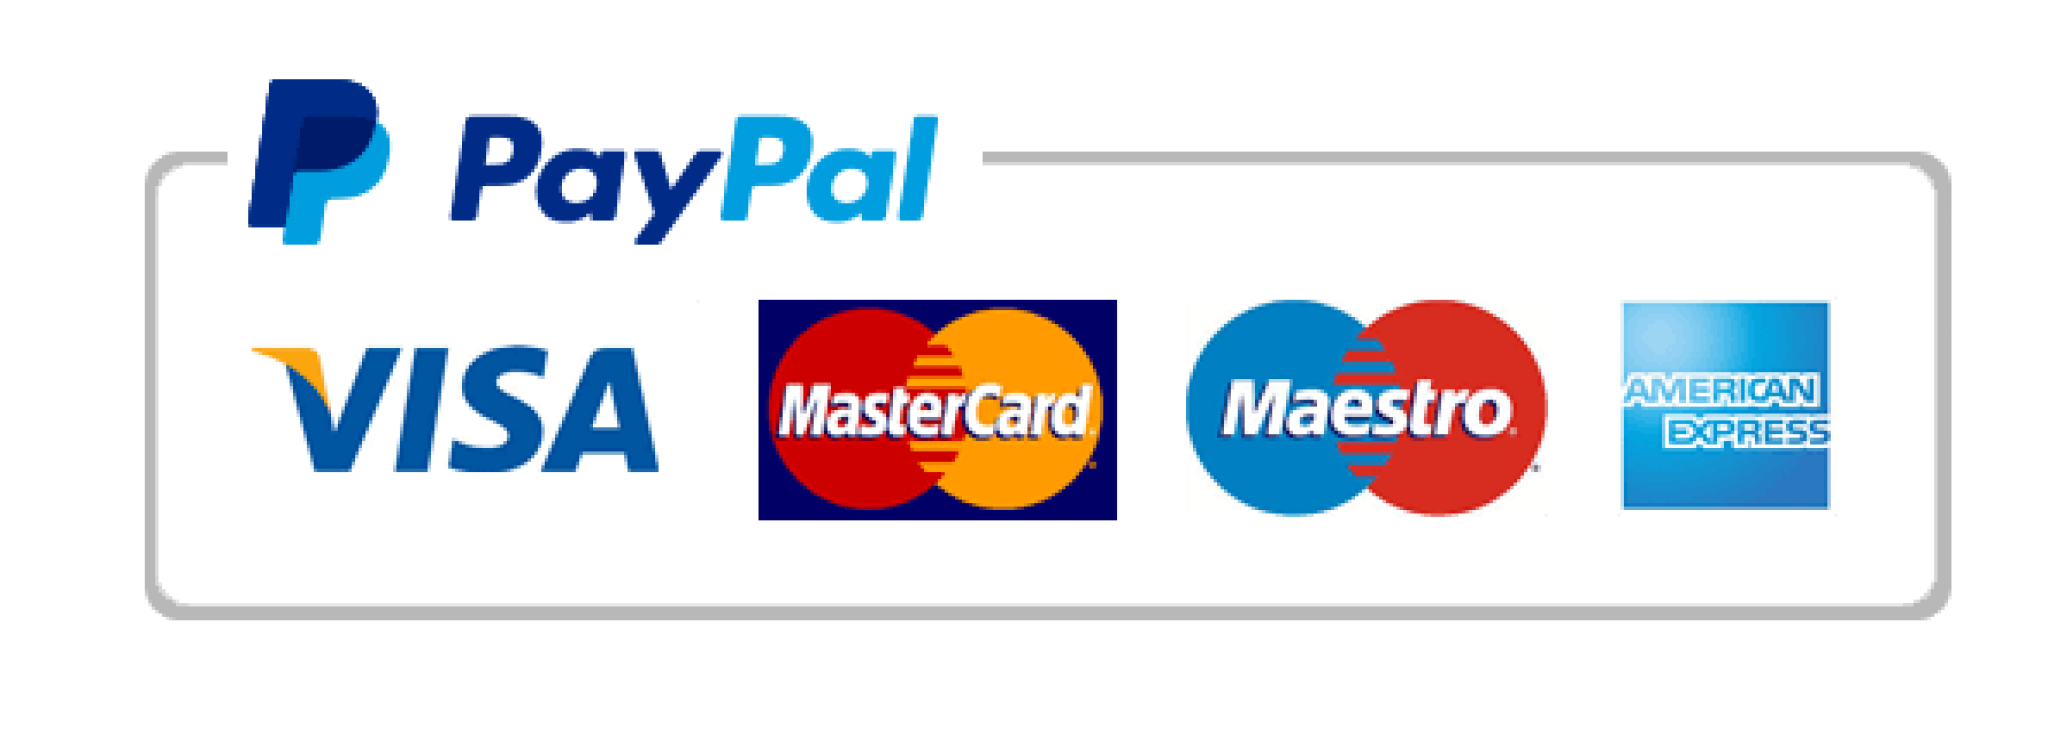 Pay method. PAYPAL логотип. PAYPAL иконка. Платежная система PAYPAL. Карта visa MASTERCARD Maestro.